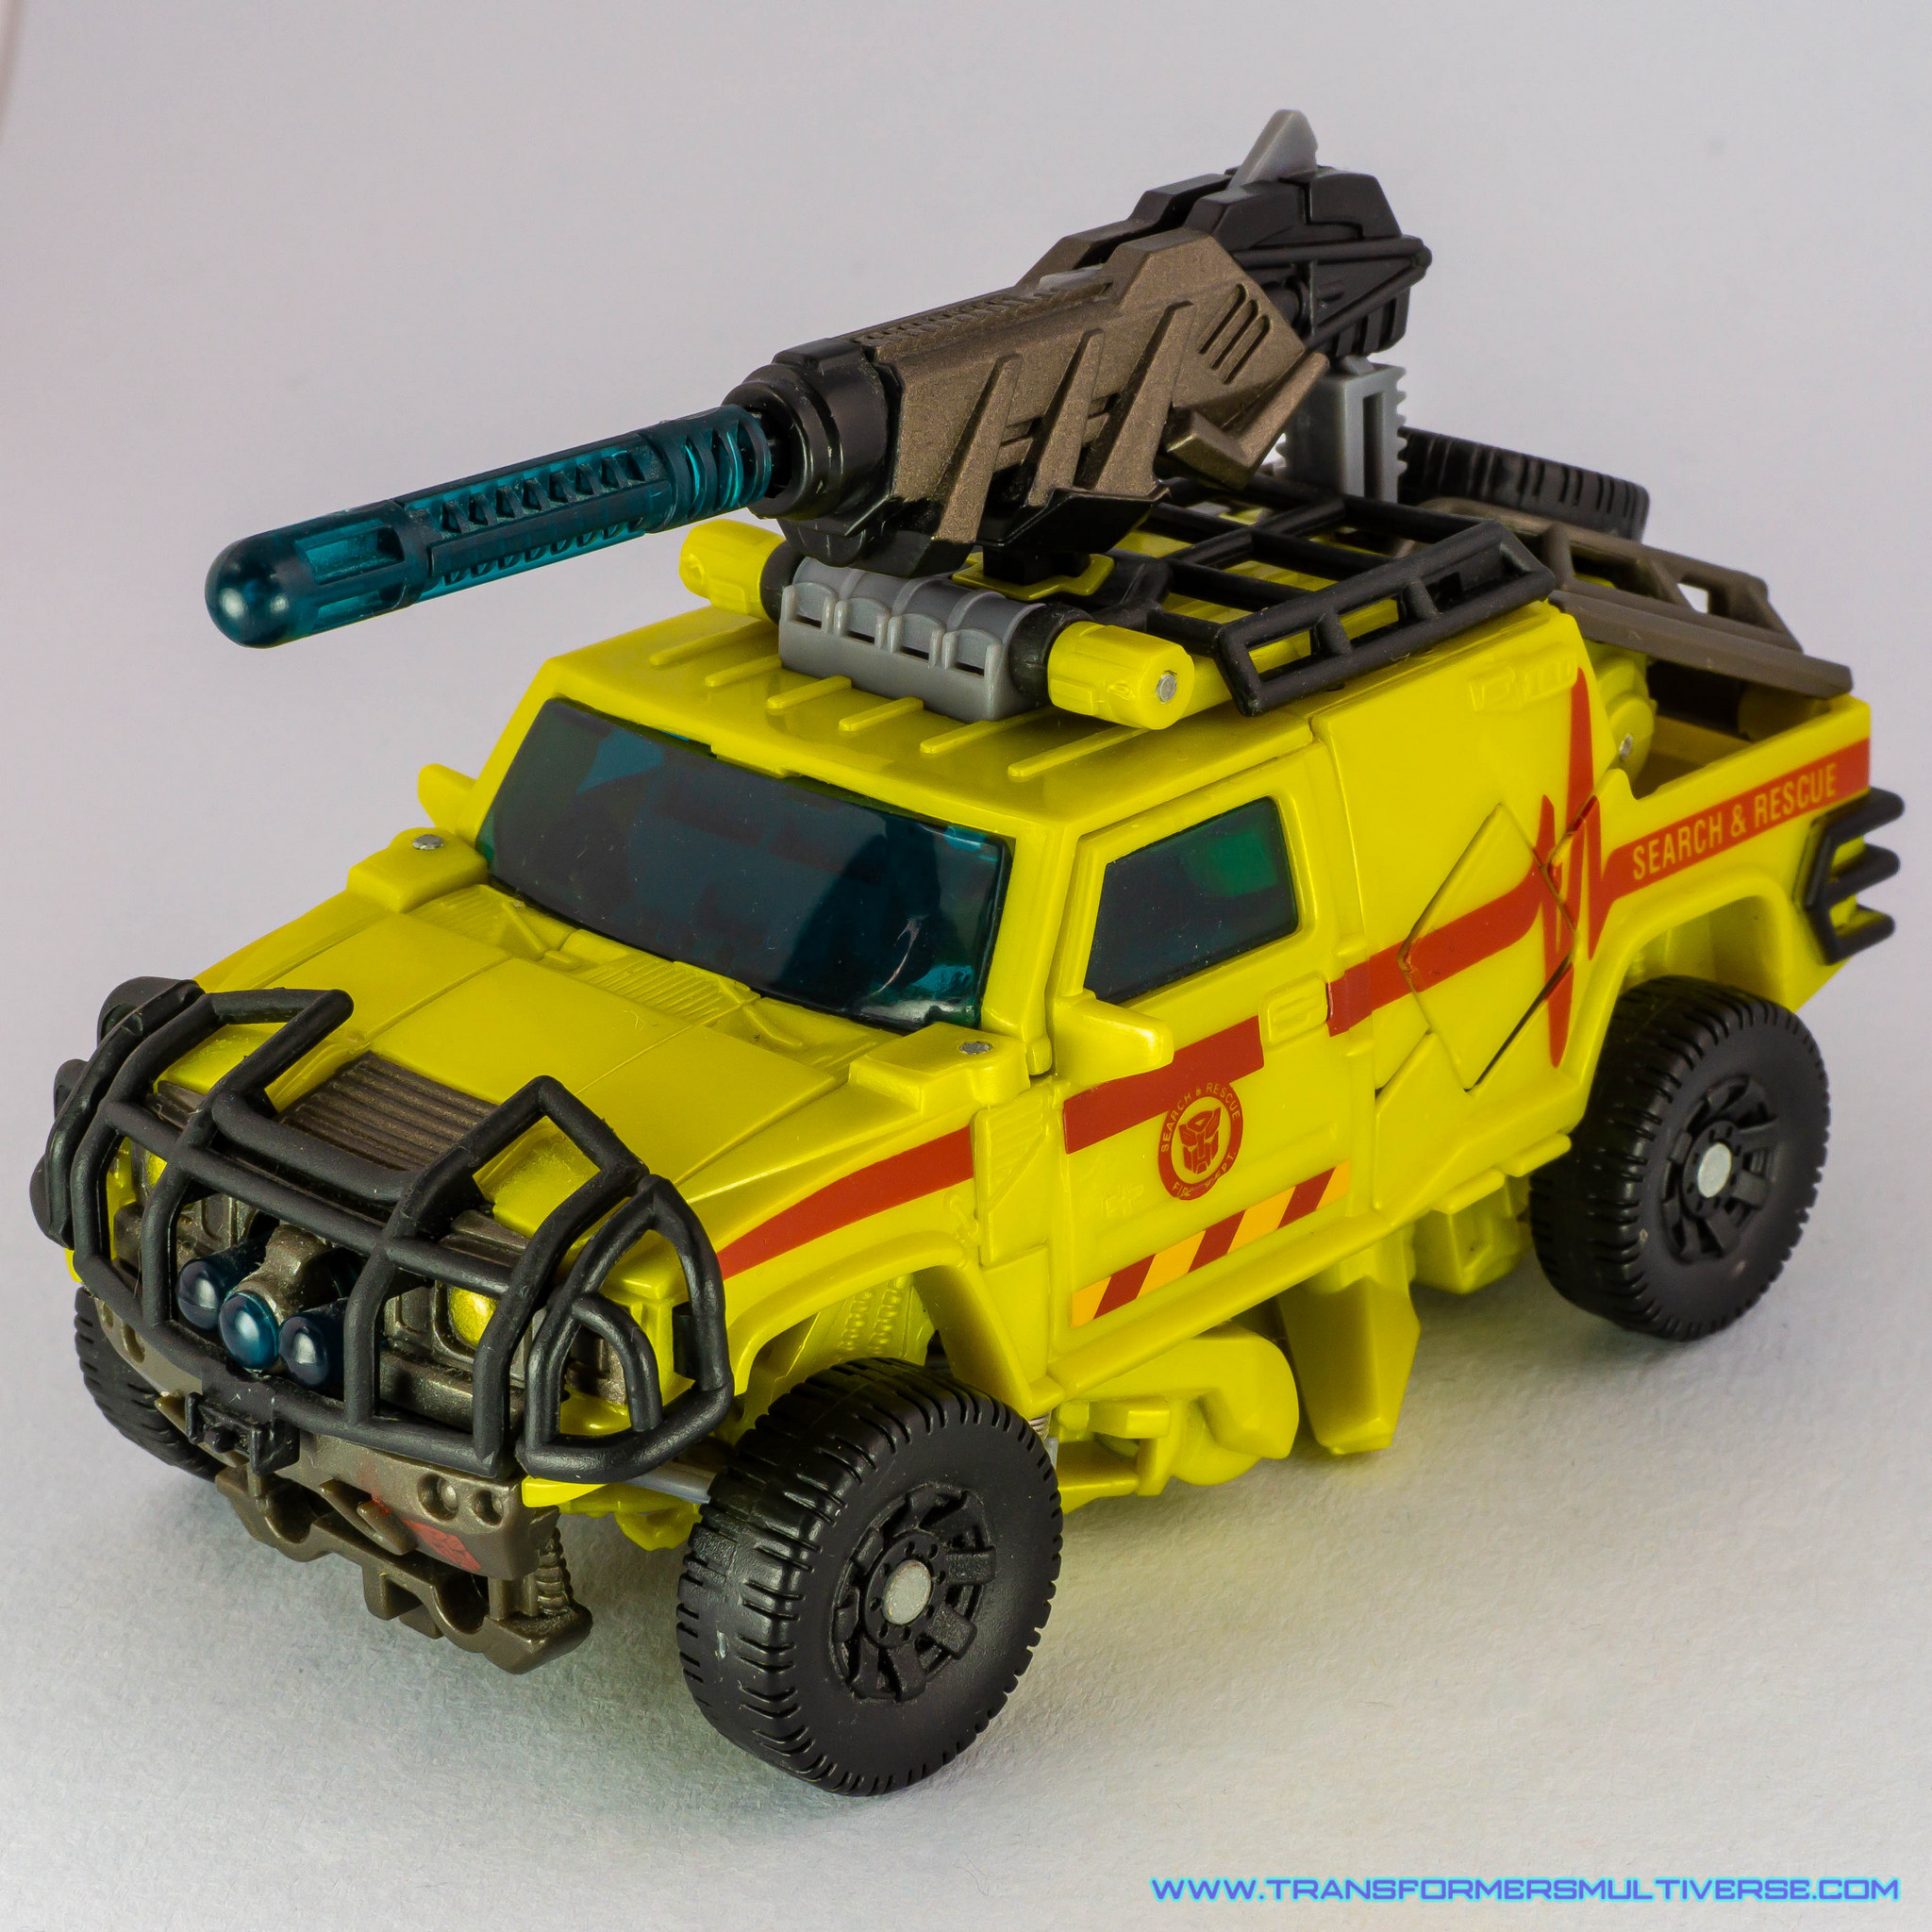 Transformers Revenge of the Fallen Ratchet Hummer vehicle mode with EMP blaster